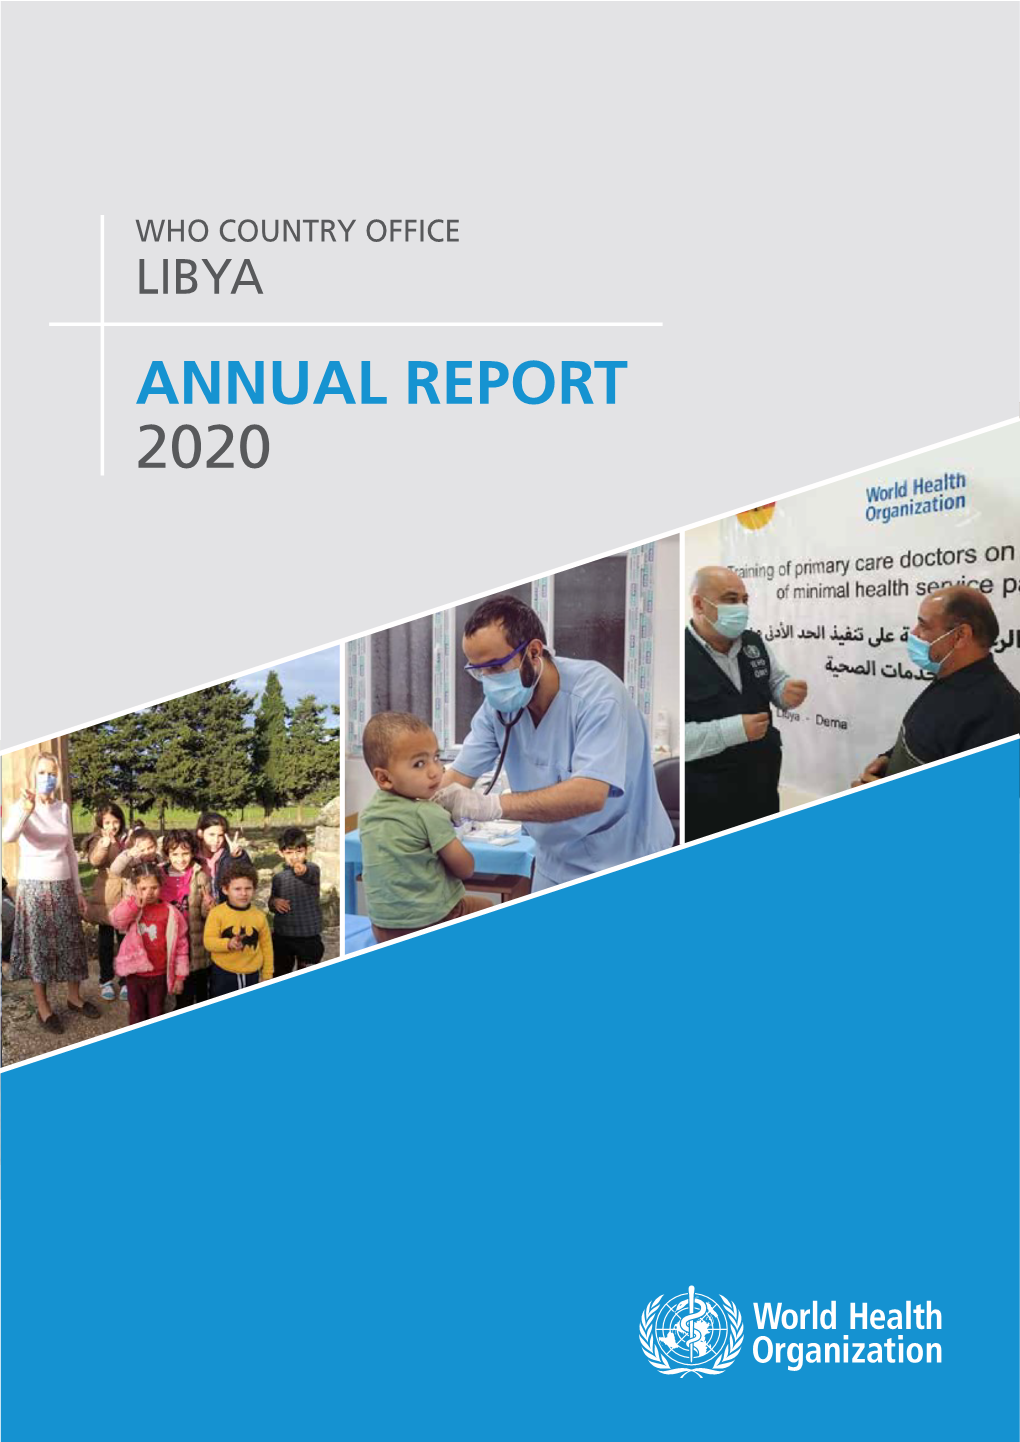 Libya's Annual Report, 2020